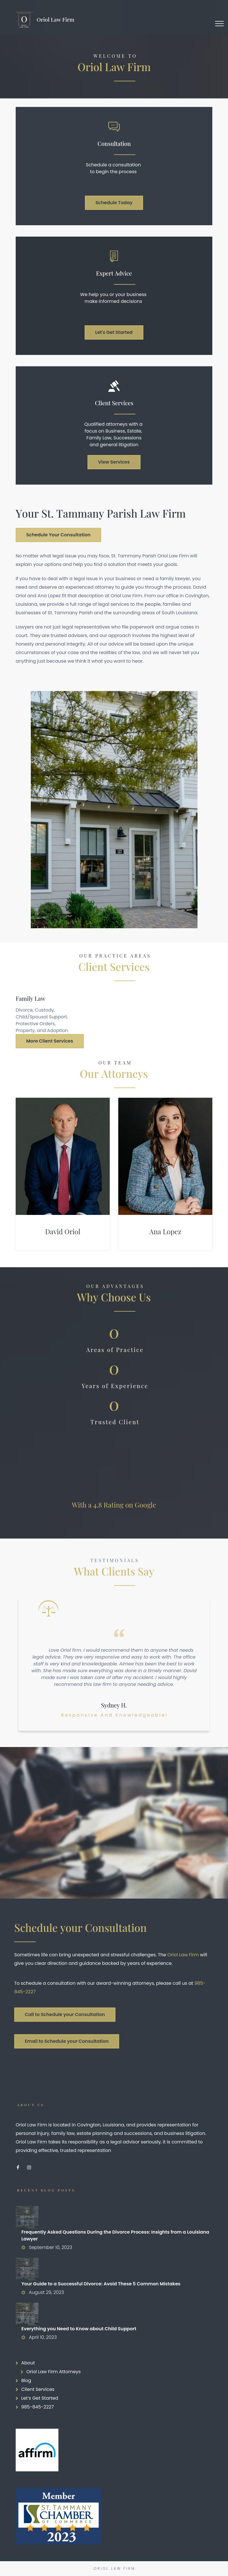 David Adrian Oriol LLC - Madisonville LA Lawyers